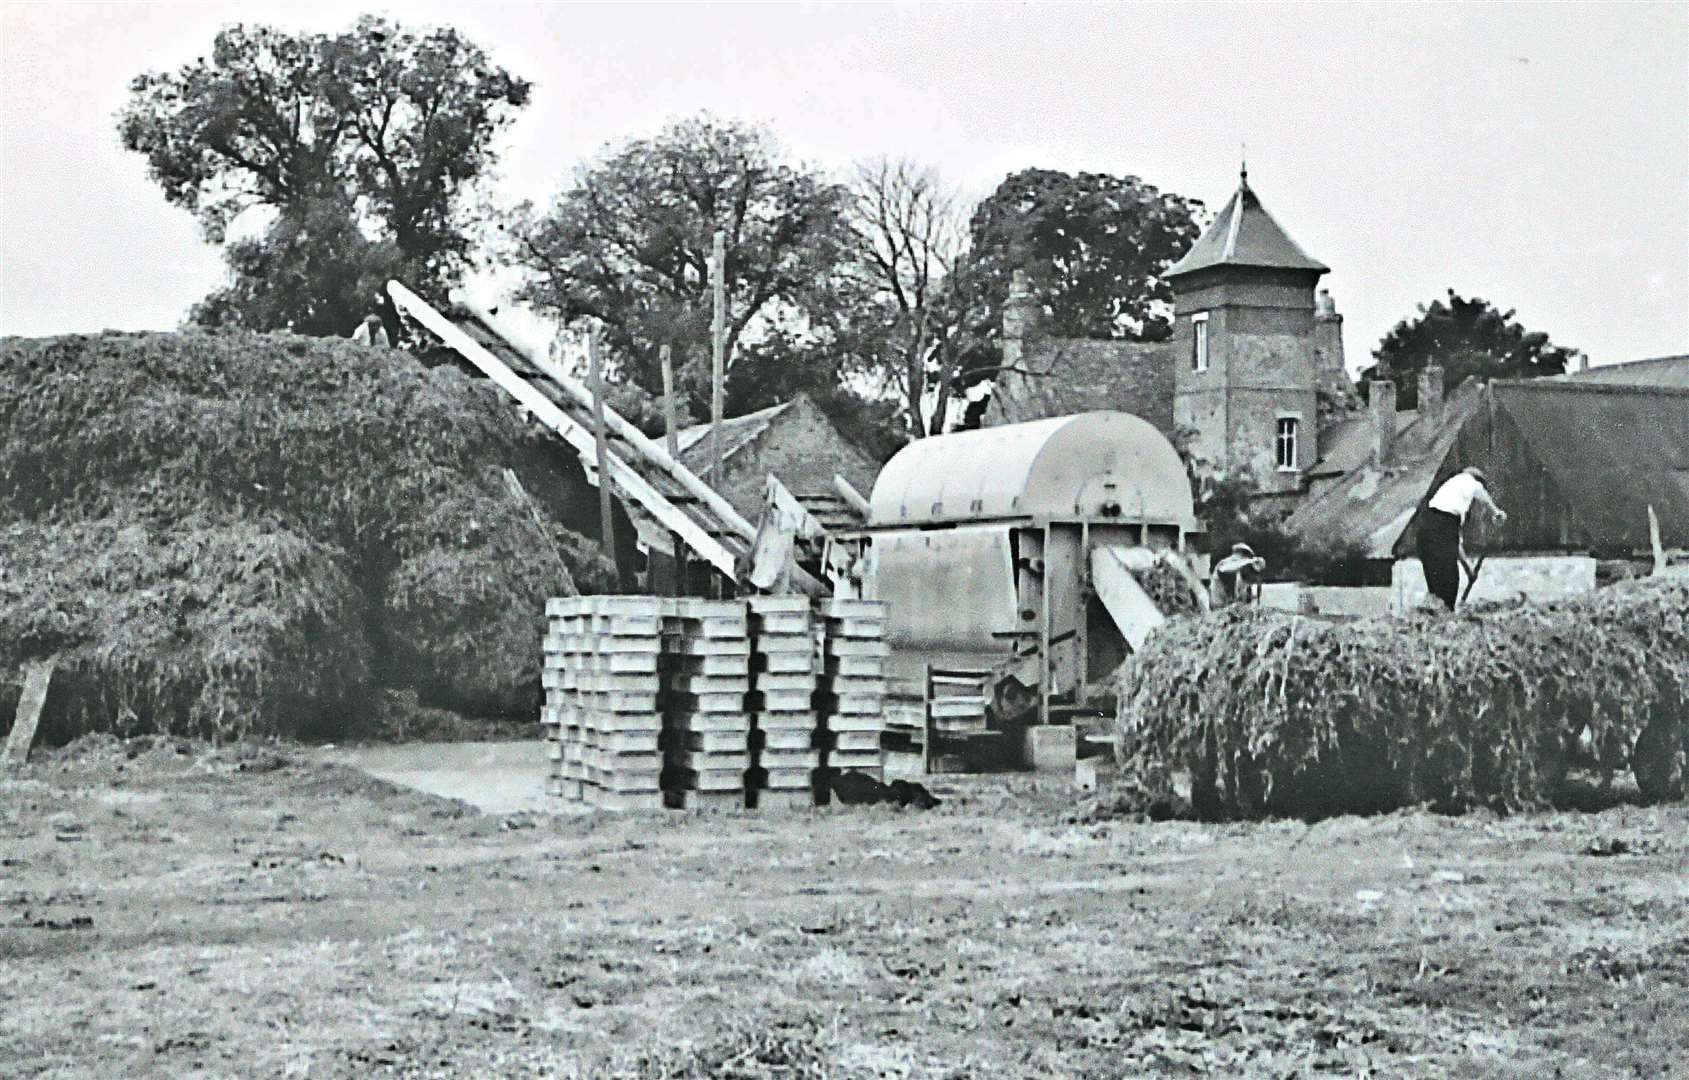 Pea viner at Tower Farm, Terrington in the 1950s.